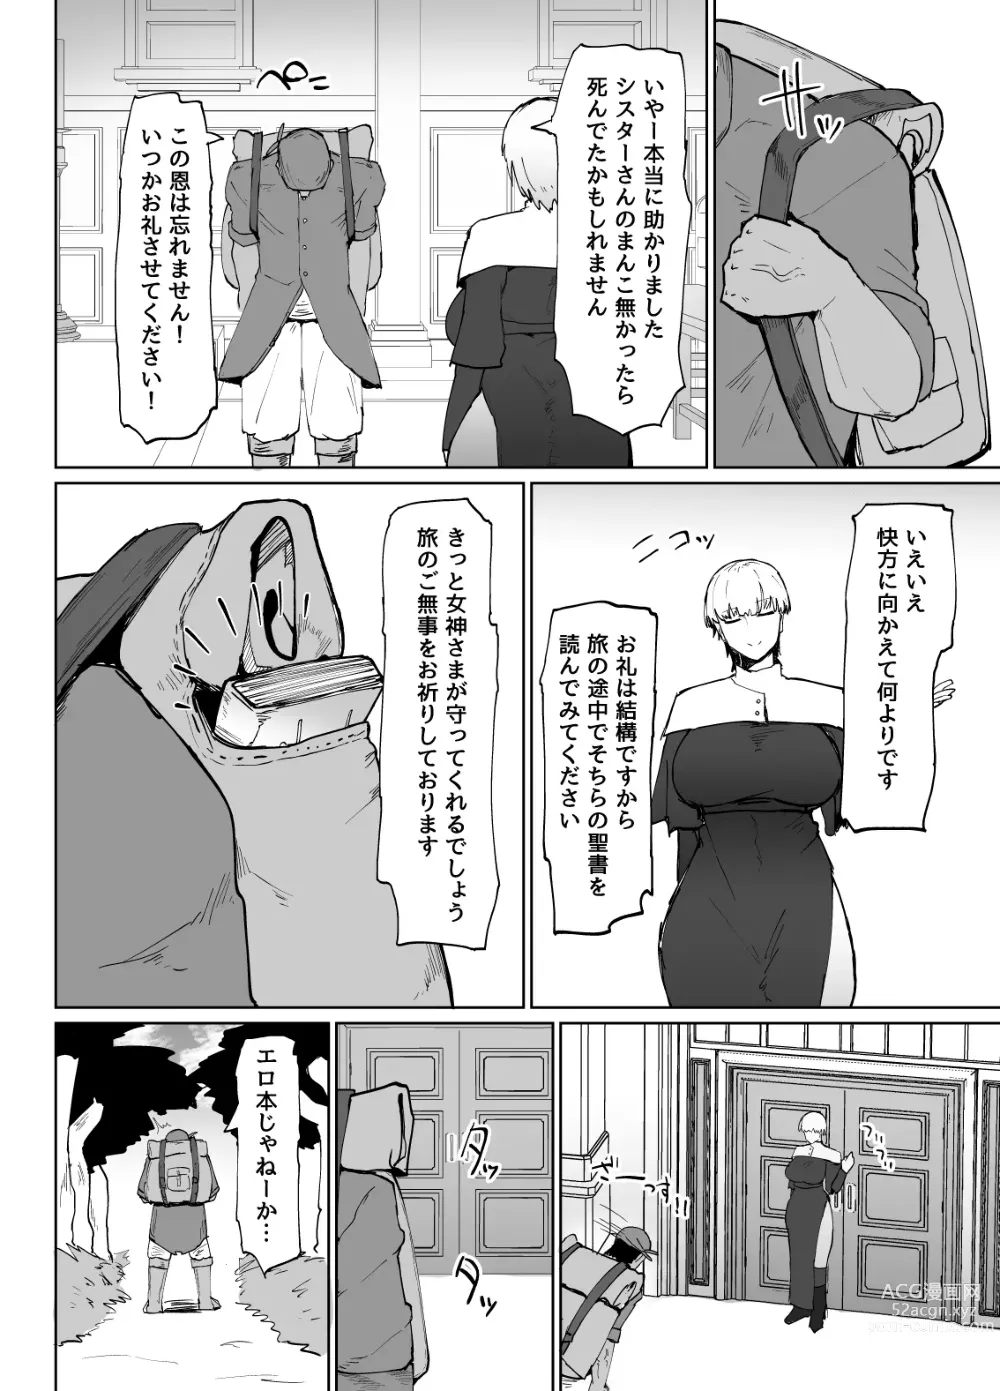 Page 21 of doujinshi 糸目でデカケツで絶対に孕まないオナホシスター